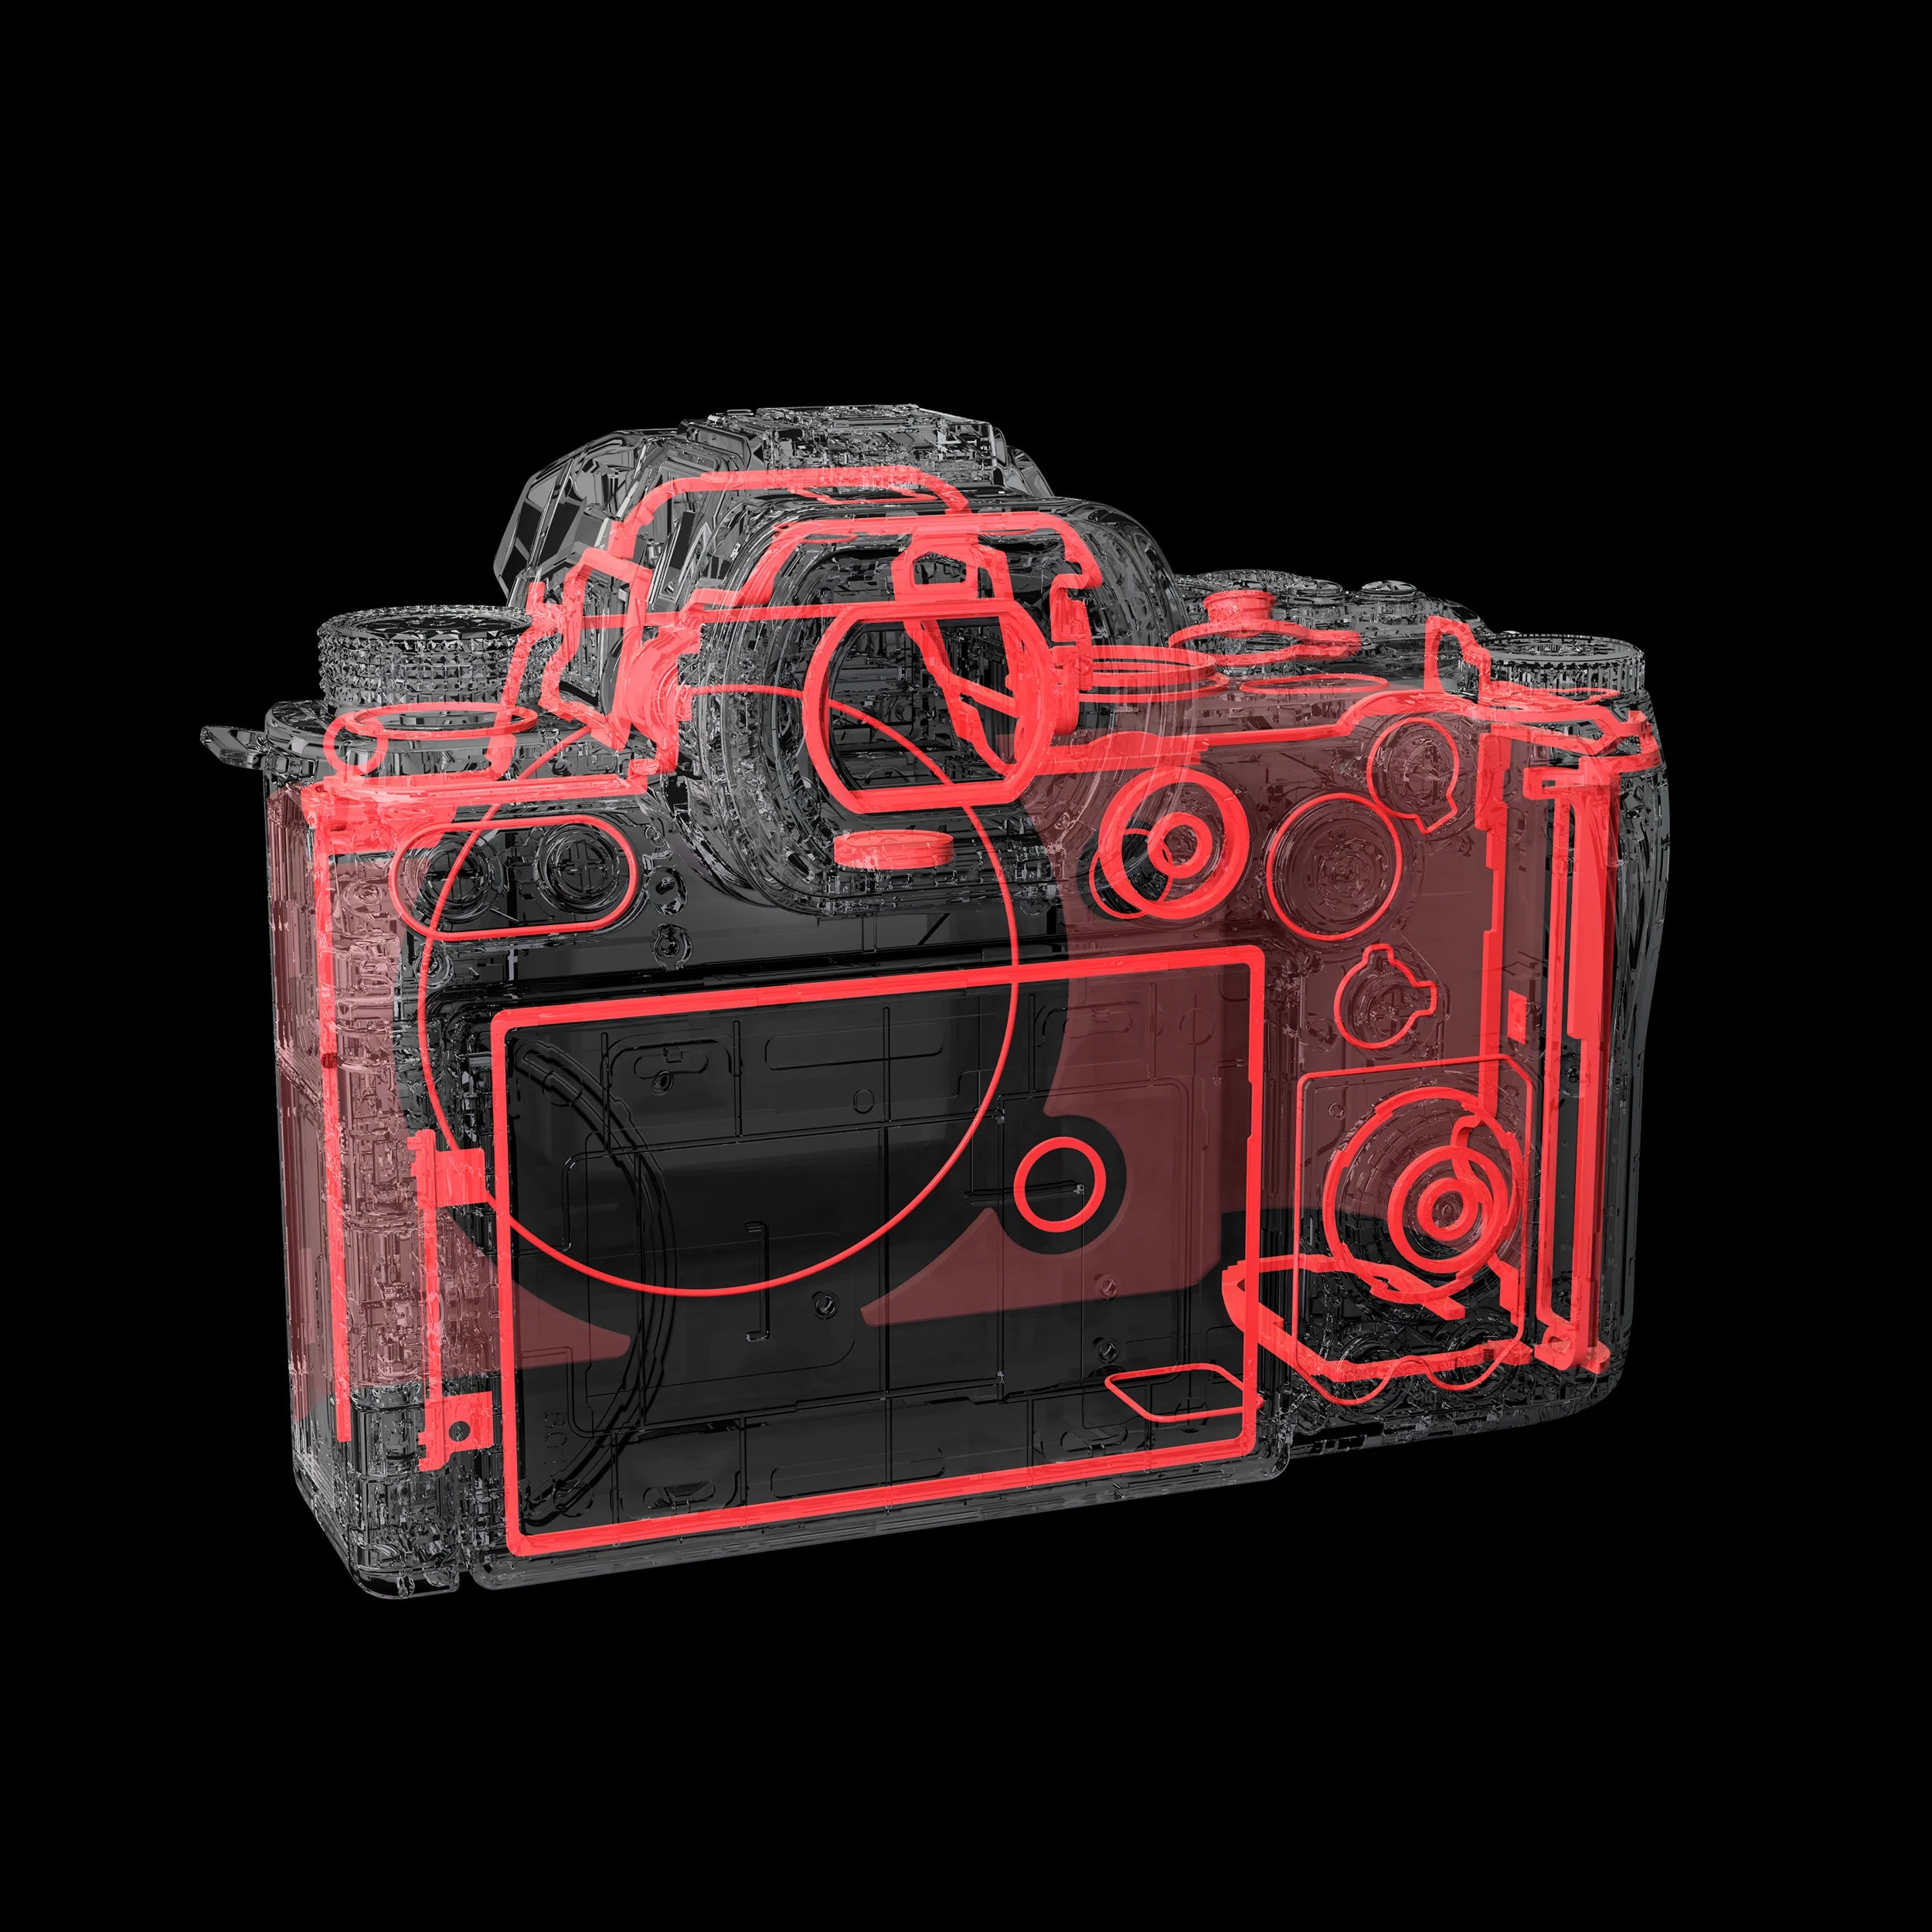 Panasonic LUMIX S5M2X Full Frame Digital Camera - Body only - 20% Preorder Deposit